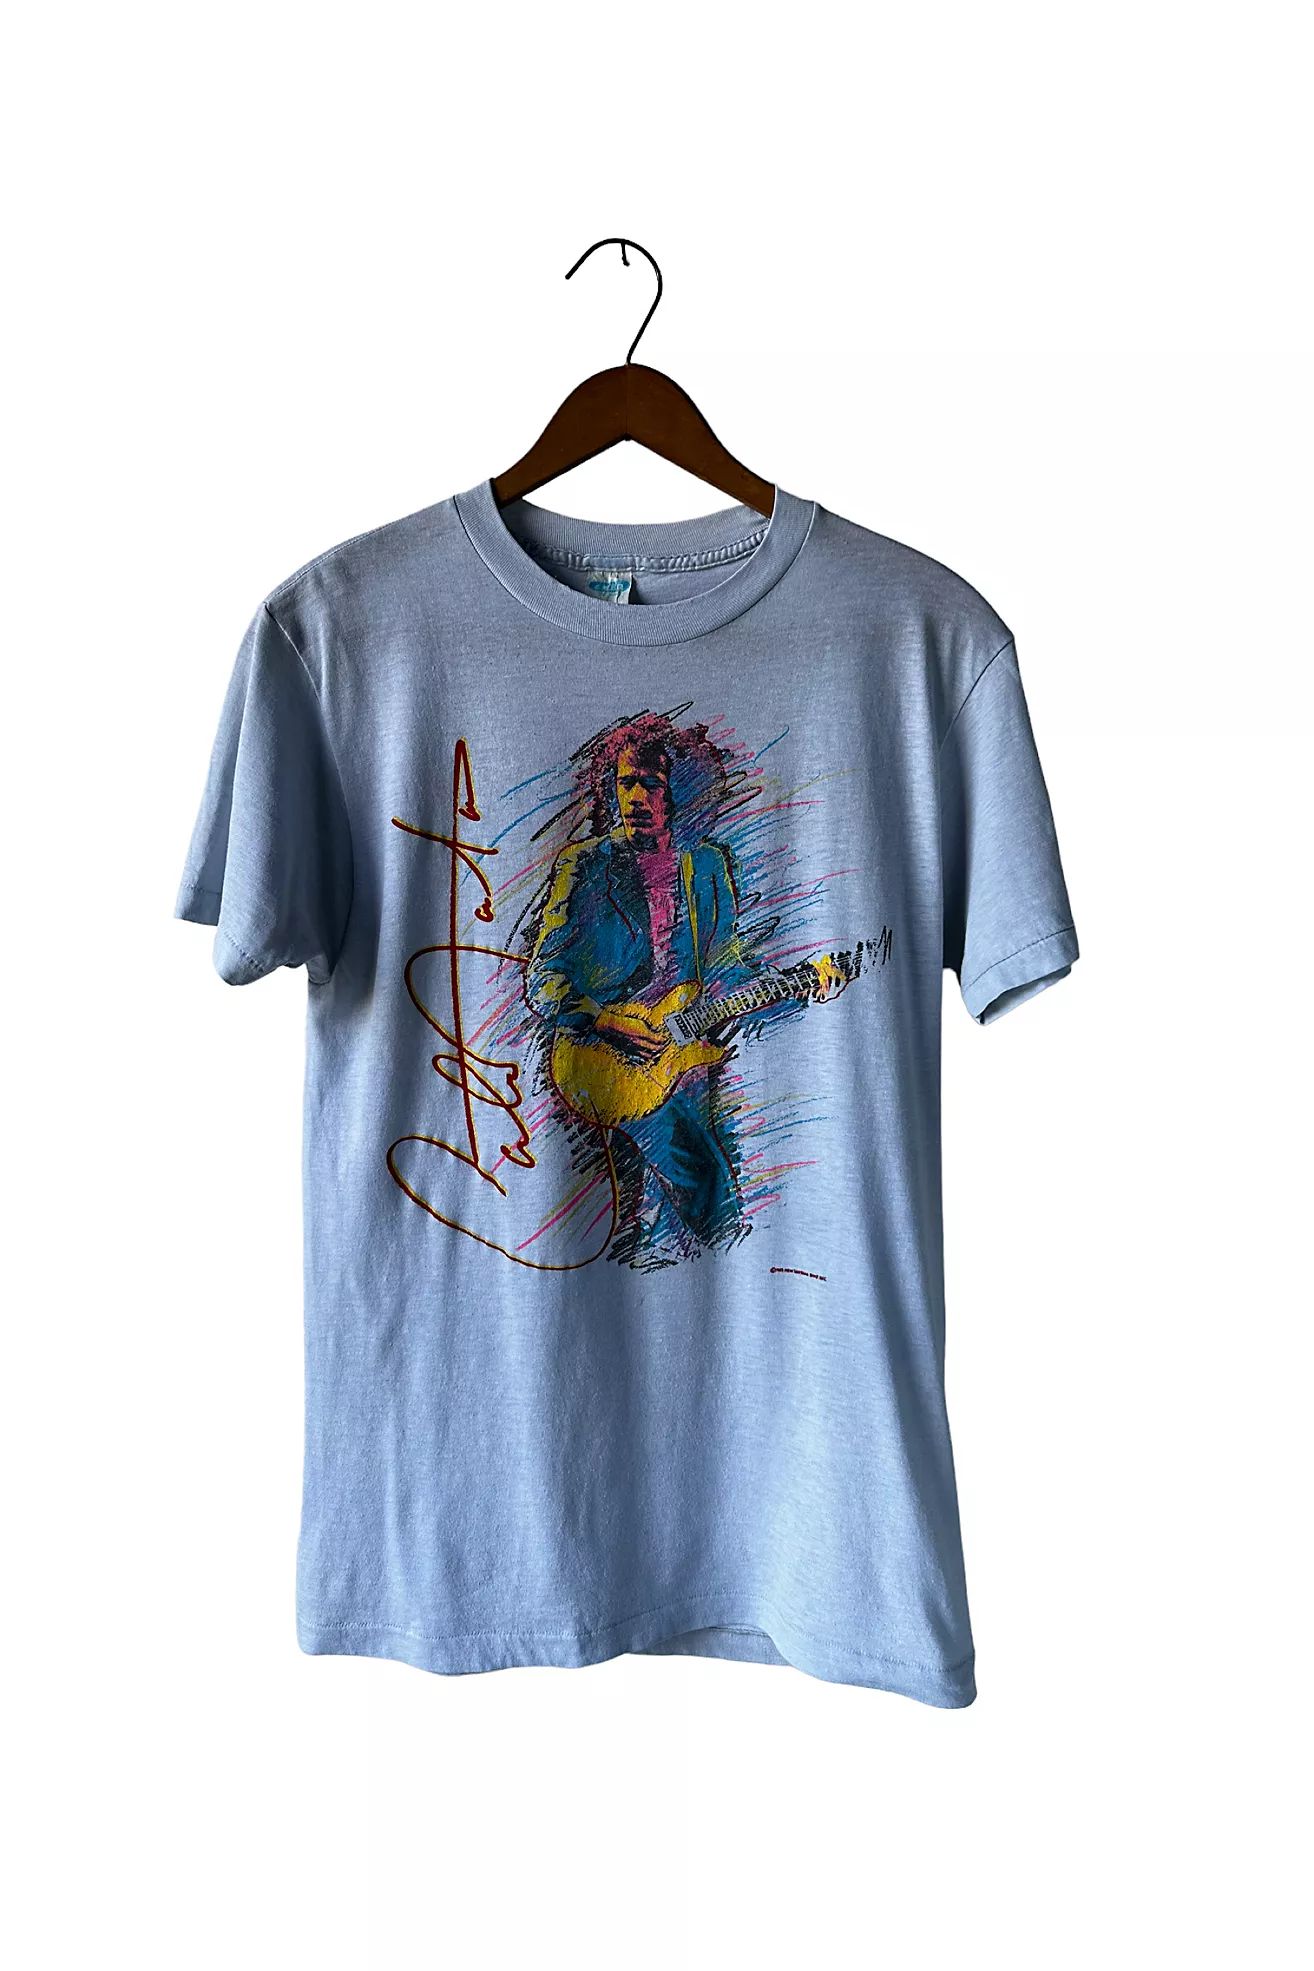 Vintage 1980's Carlos Santana Concert Tour T-shirt Selected by Vintage Warrior | Free People (Global - UK&FR Excluded)